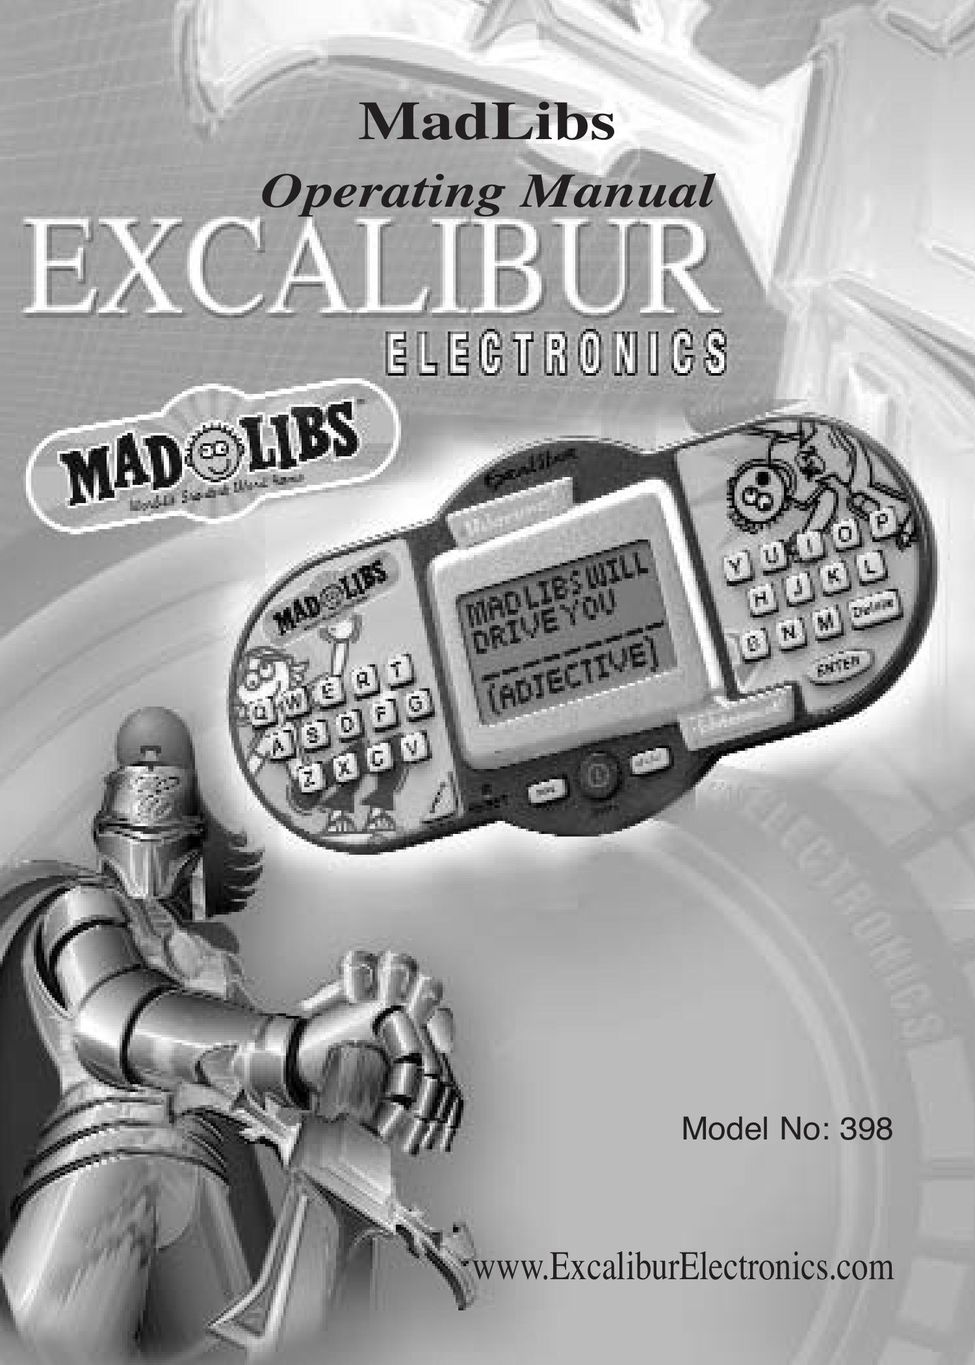 Excalibur electronic 398 Handheld Game System User Manual